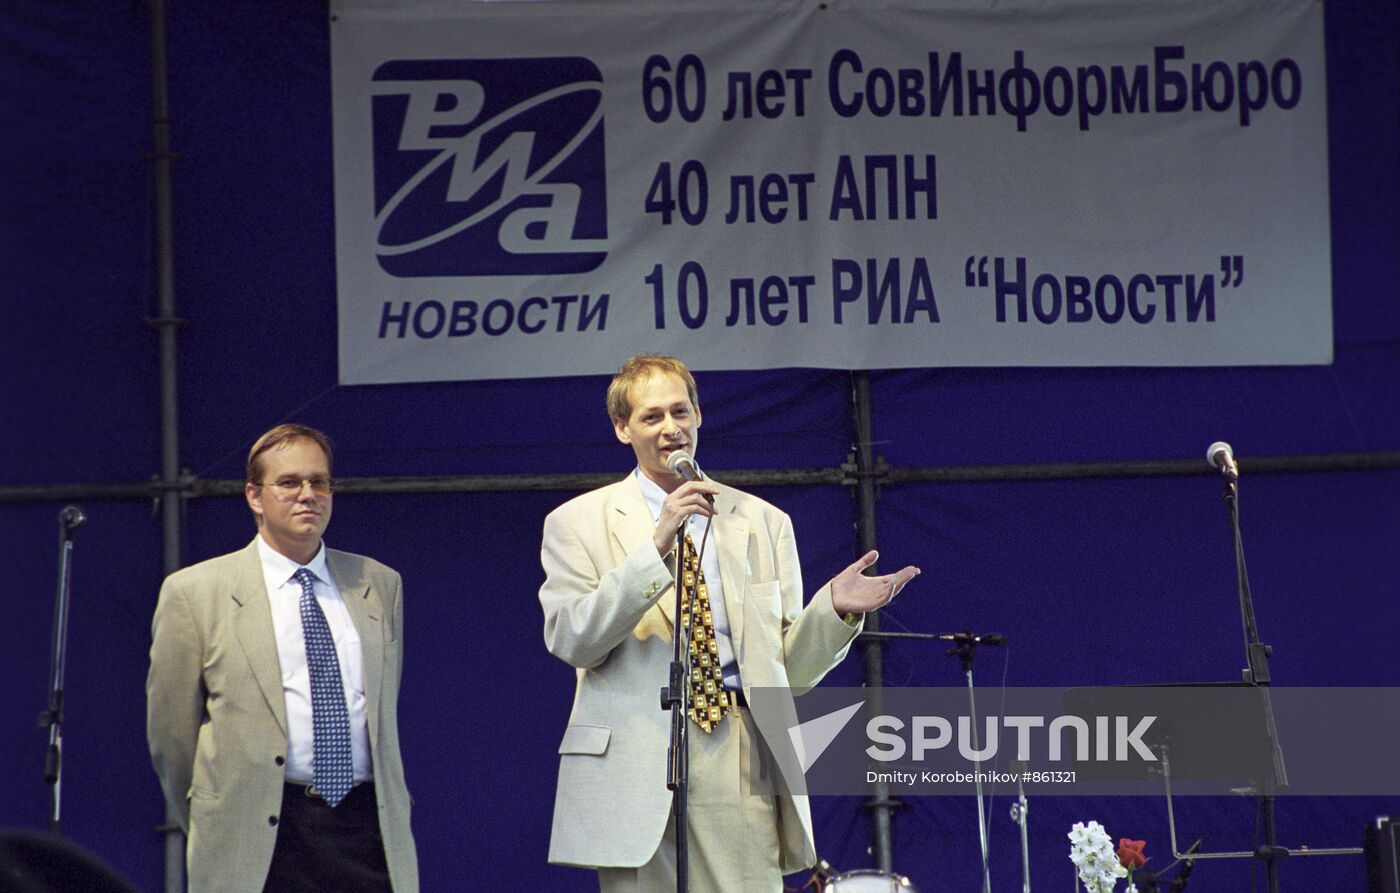 RIA Novosti anniversary